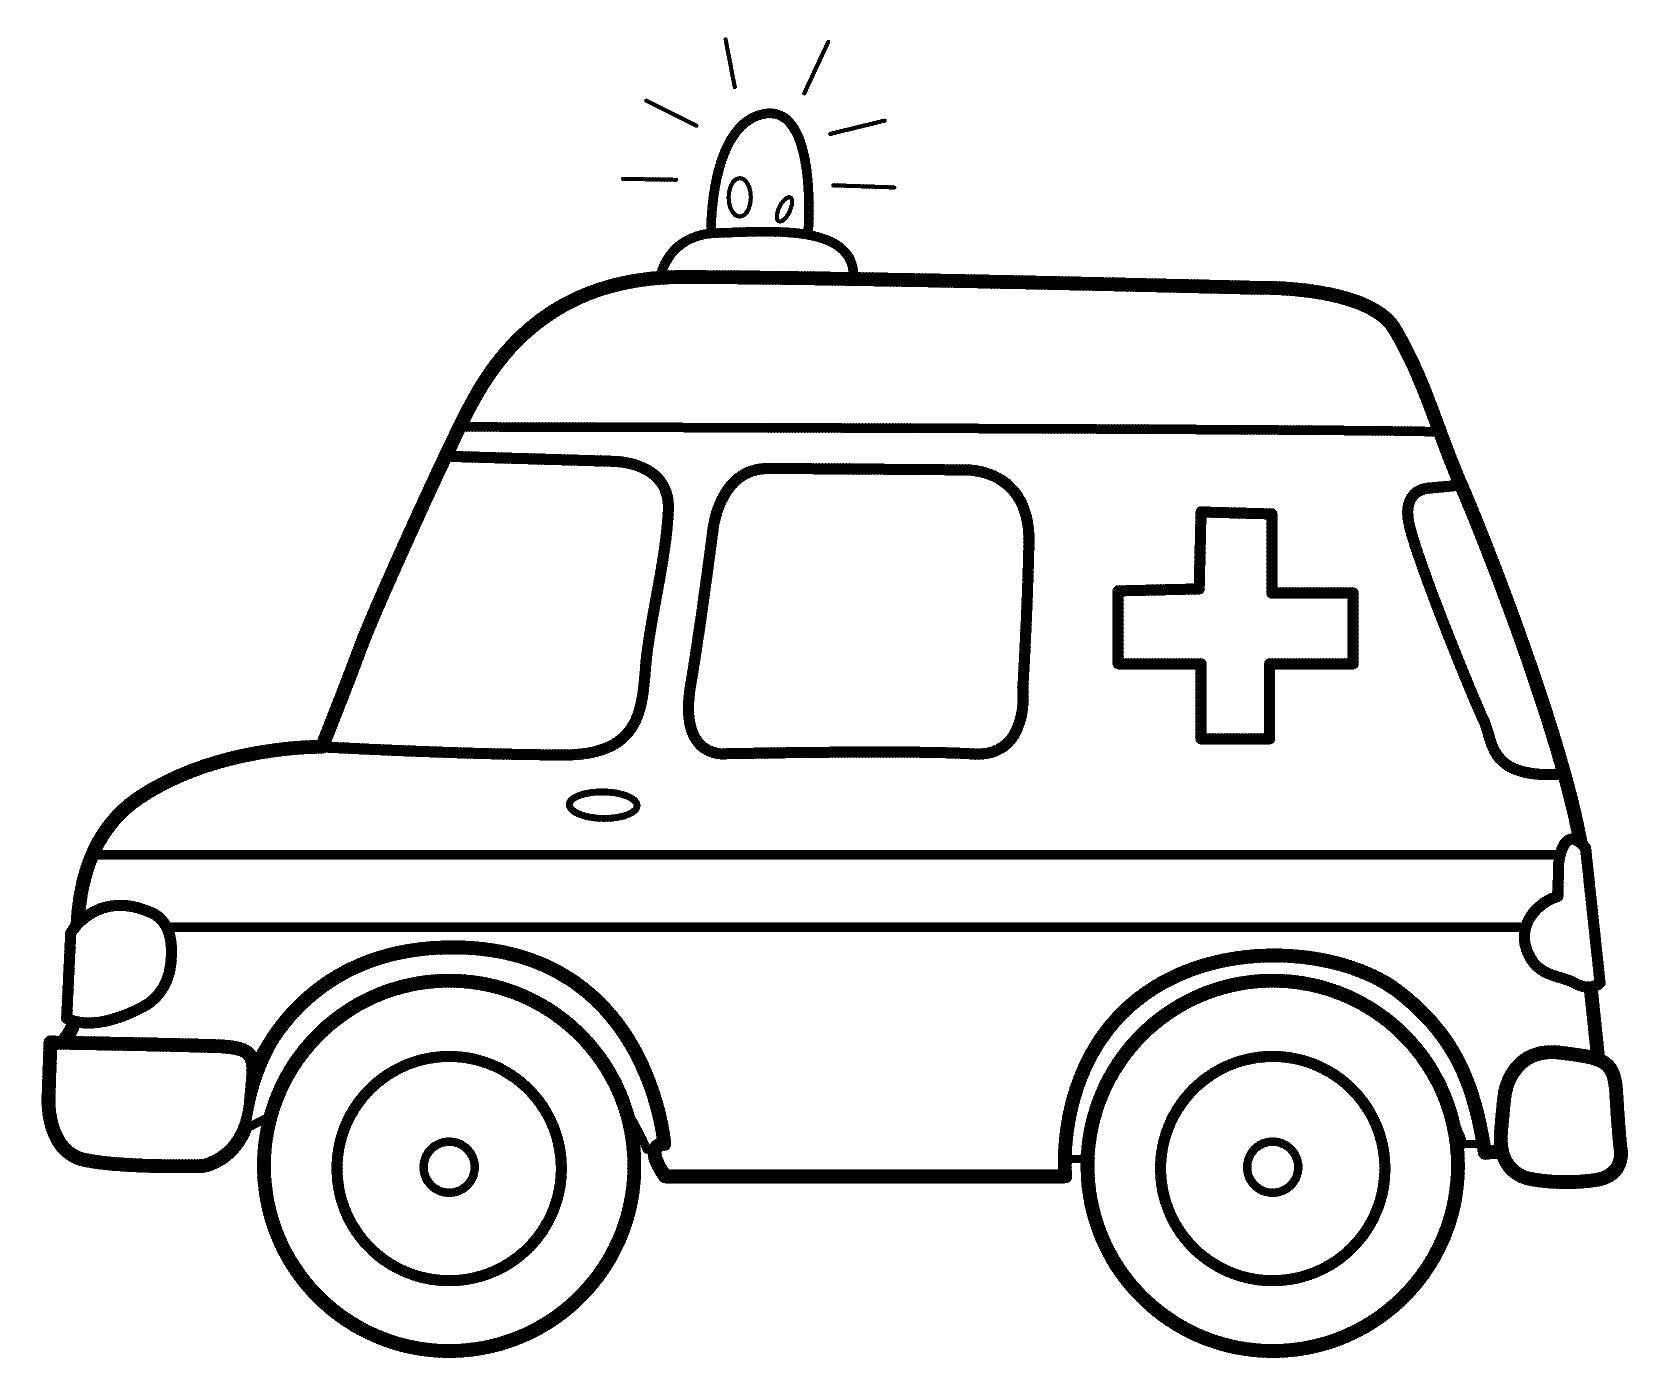 Опис: розмальовки  Машина швидкої допомоги. Категорія: швидка допомога. Теги:  Транспорт, машина.